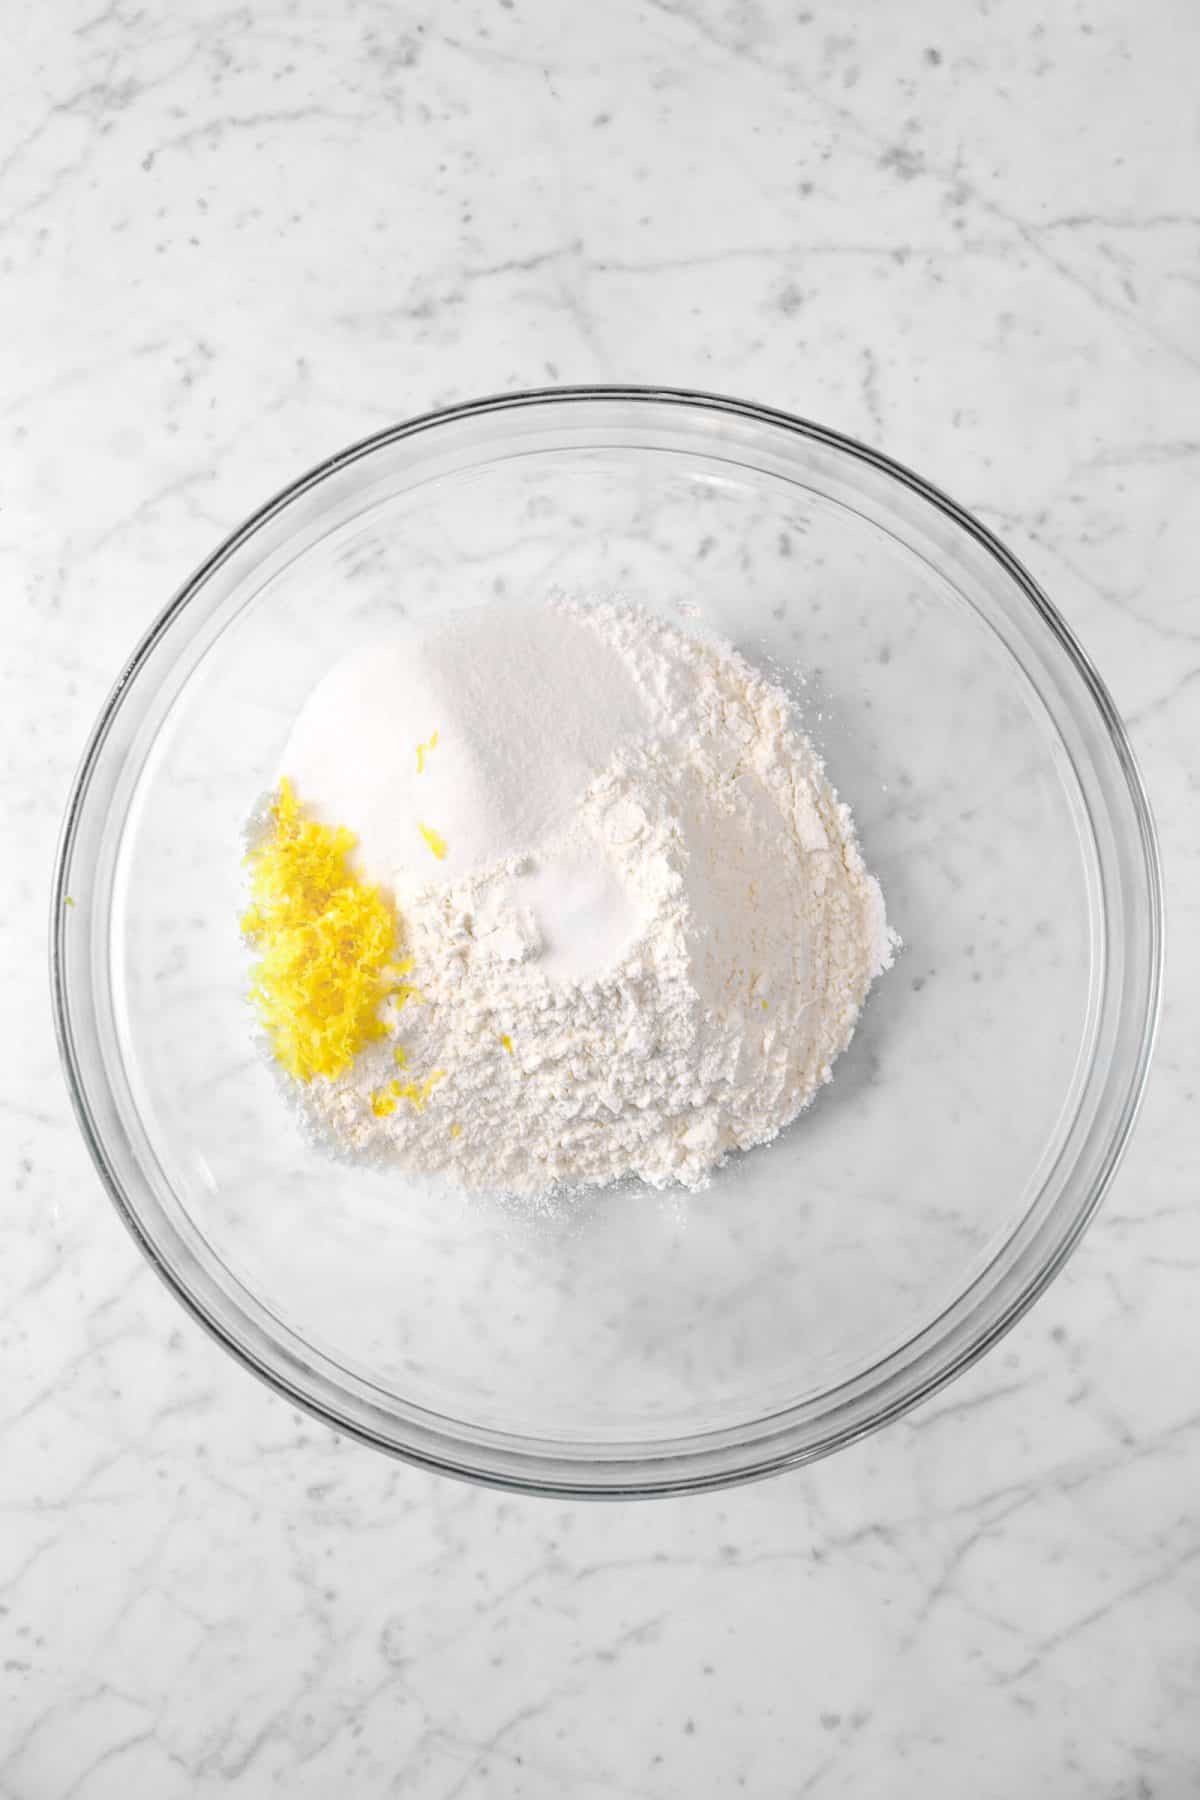 flour, sugar, baking powder, and lemon zest in a glass bowl